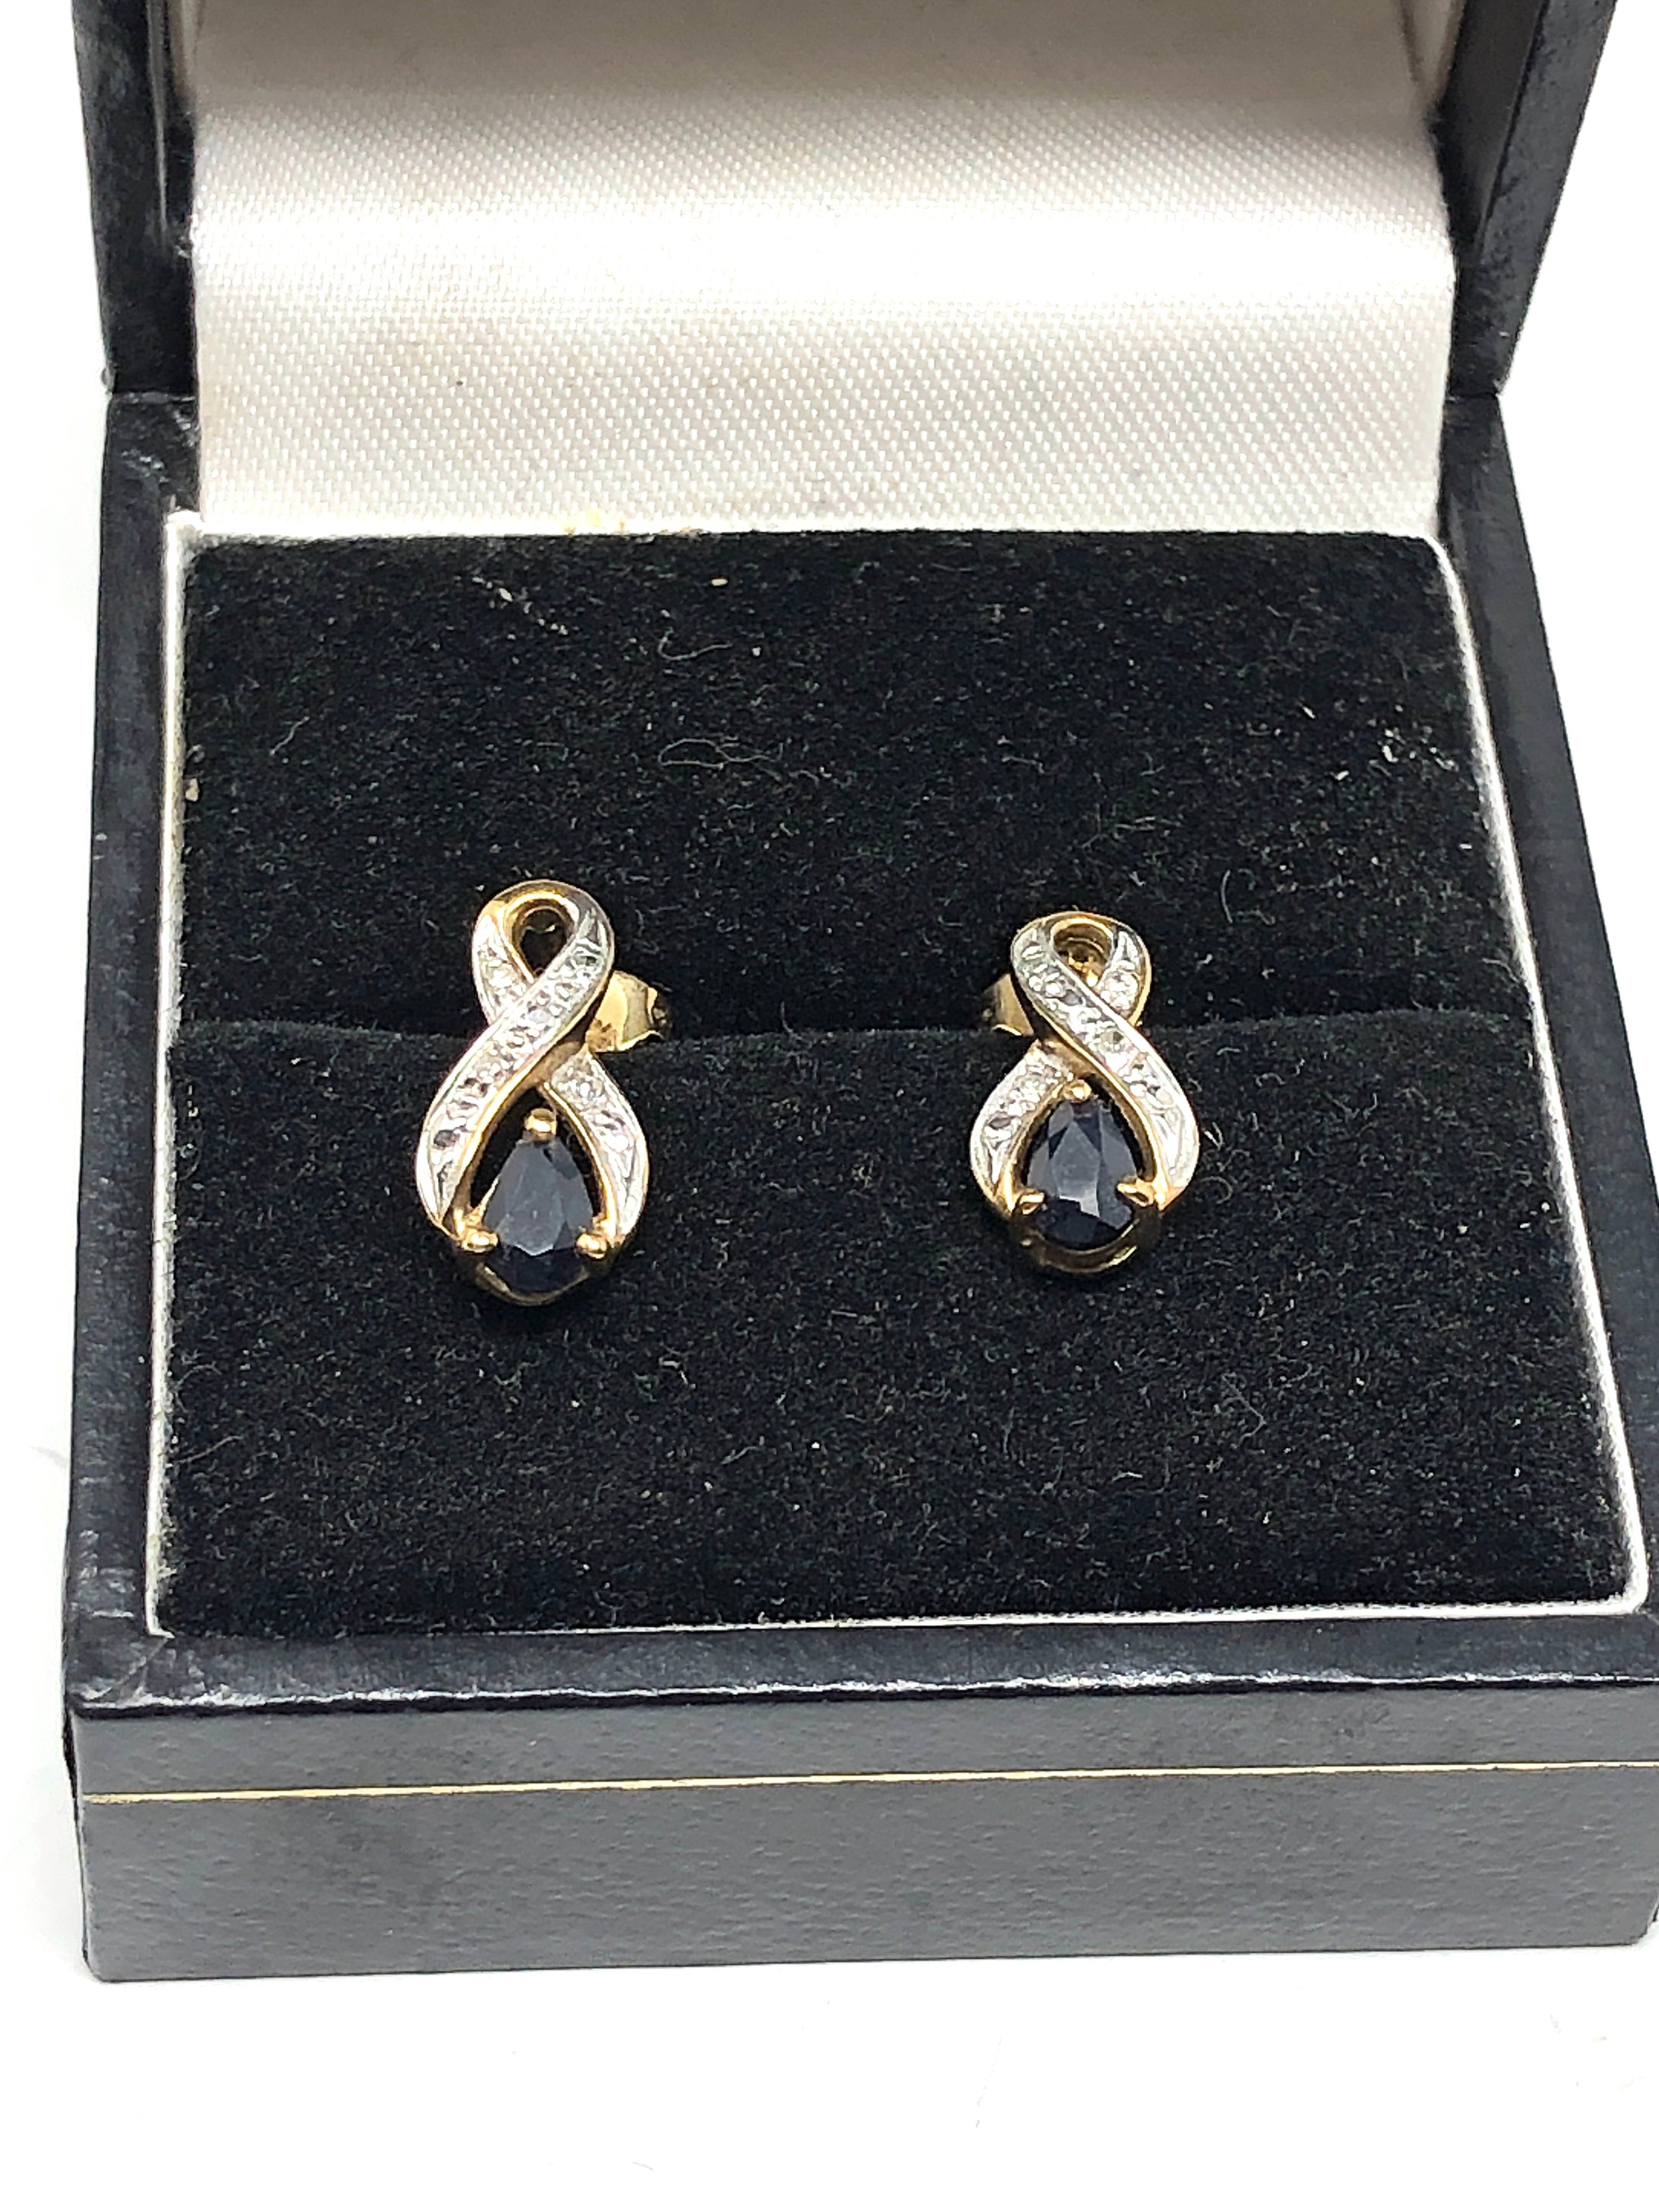 9ct gold diamond & sapphire earrings weight 1.5g